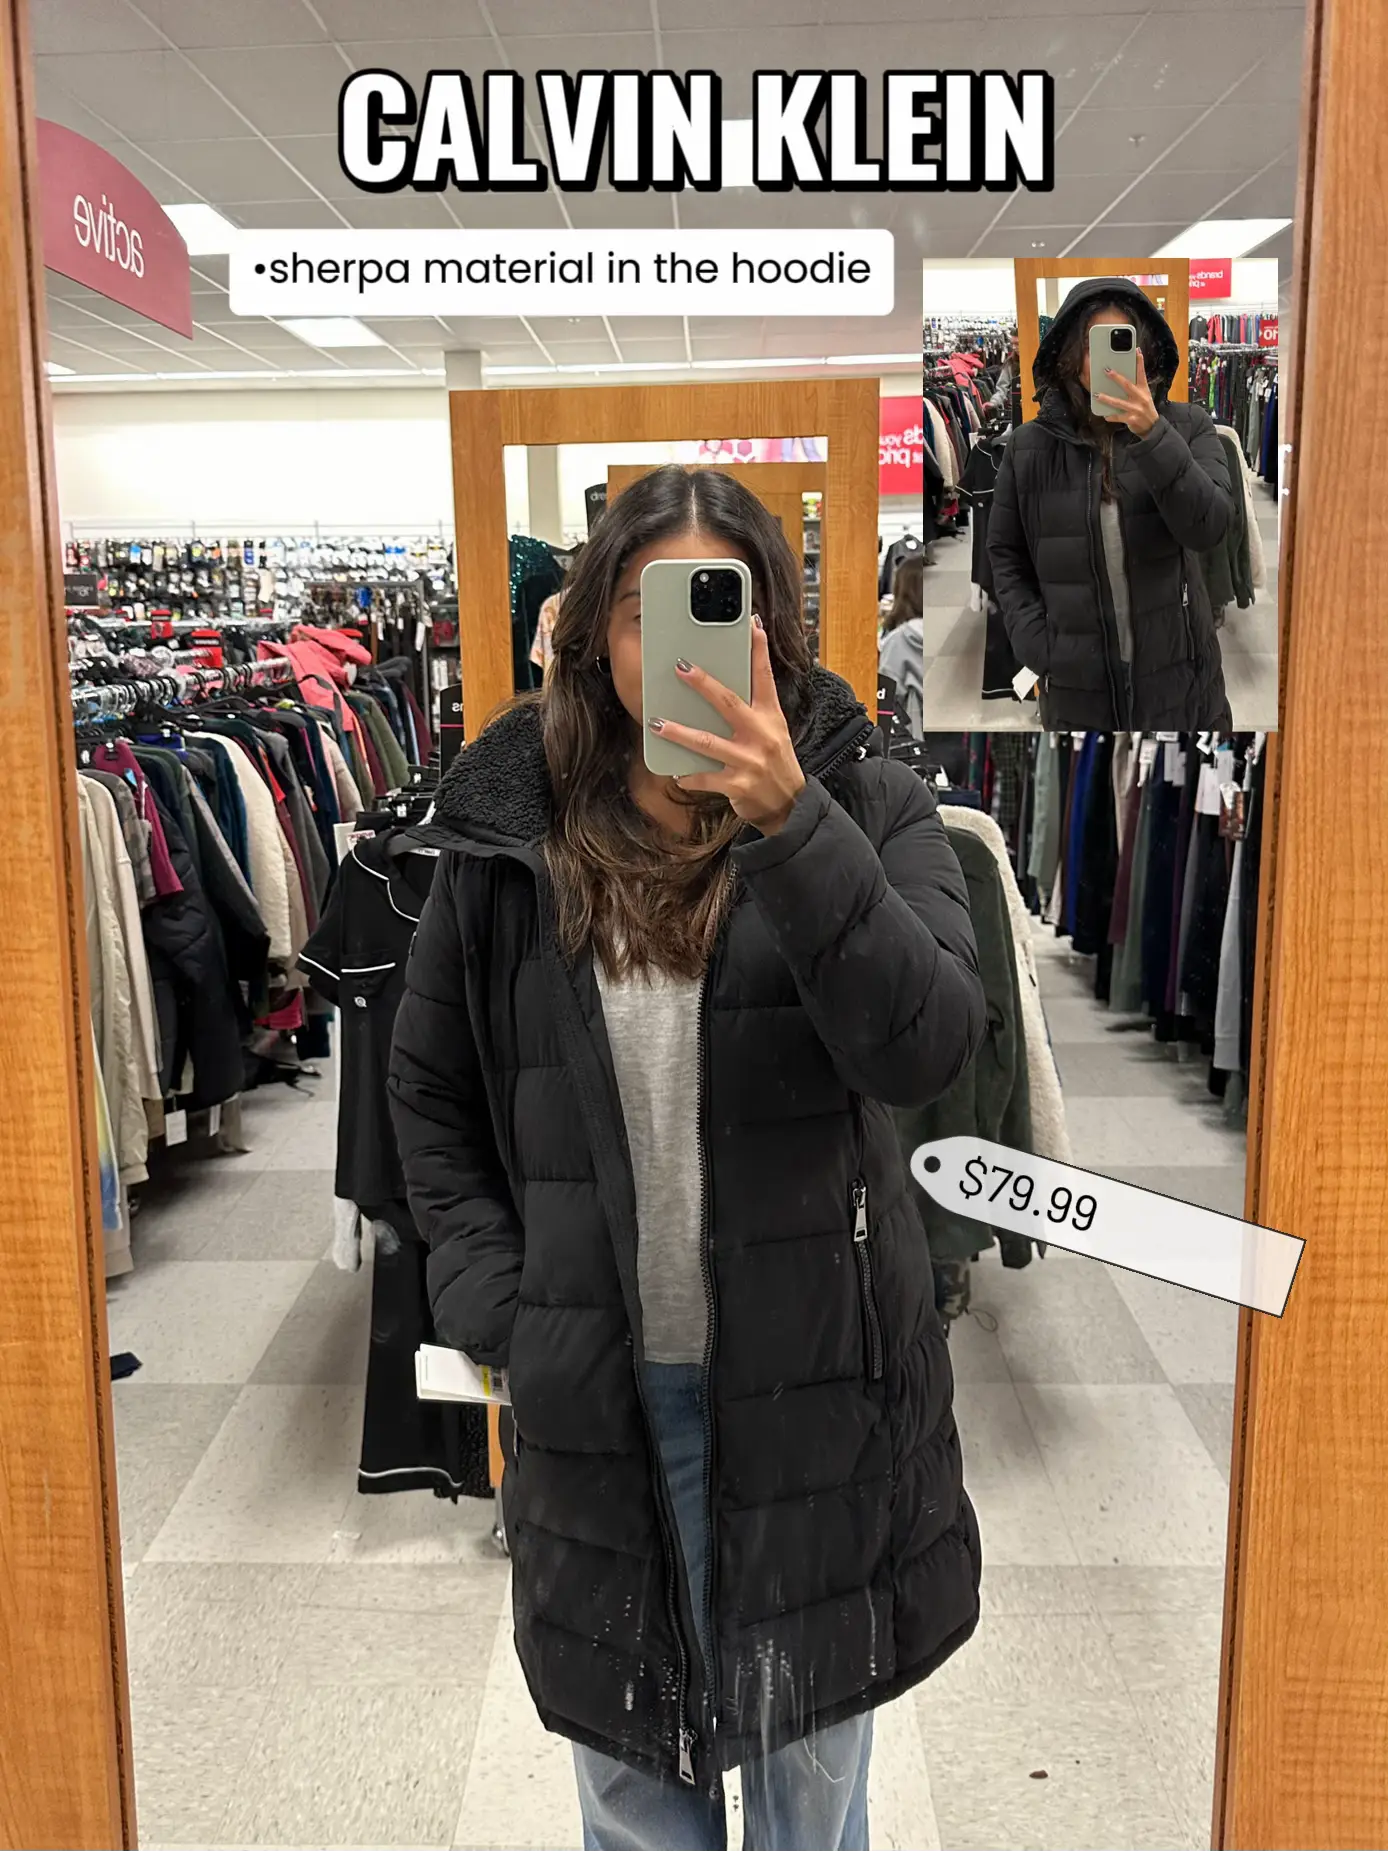  A woman is taking a selfie in a store.